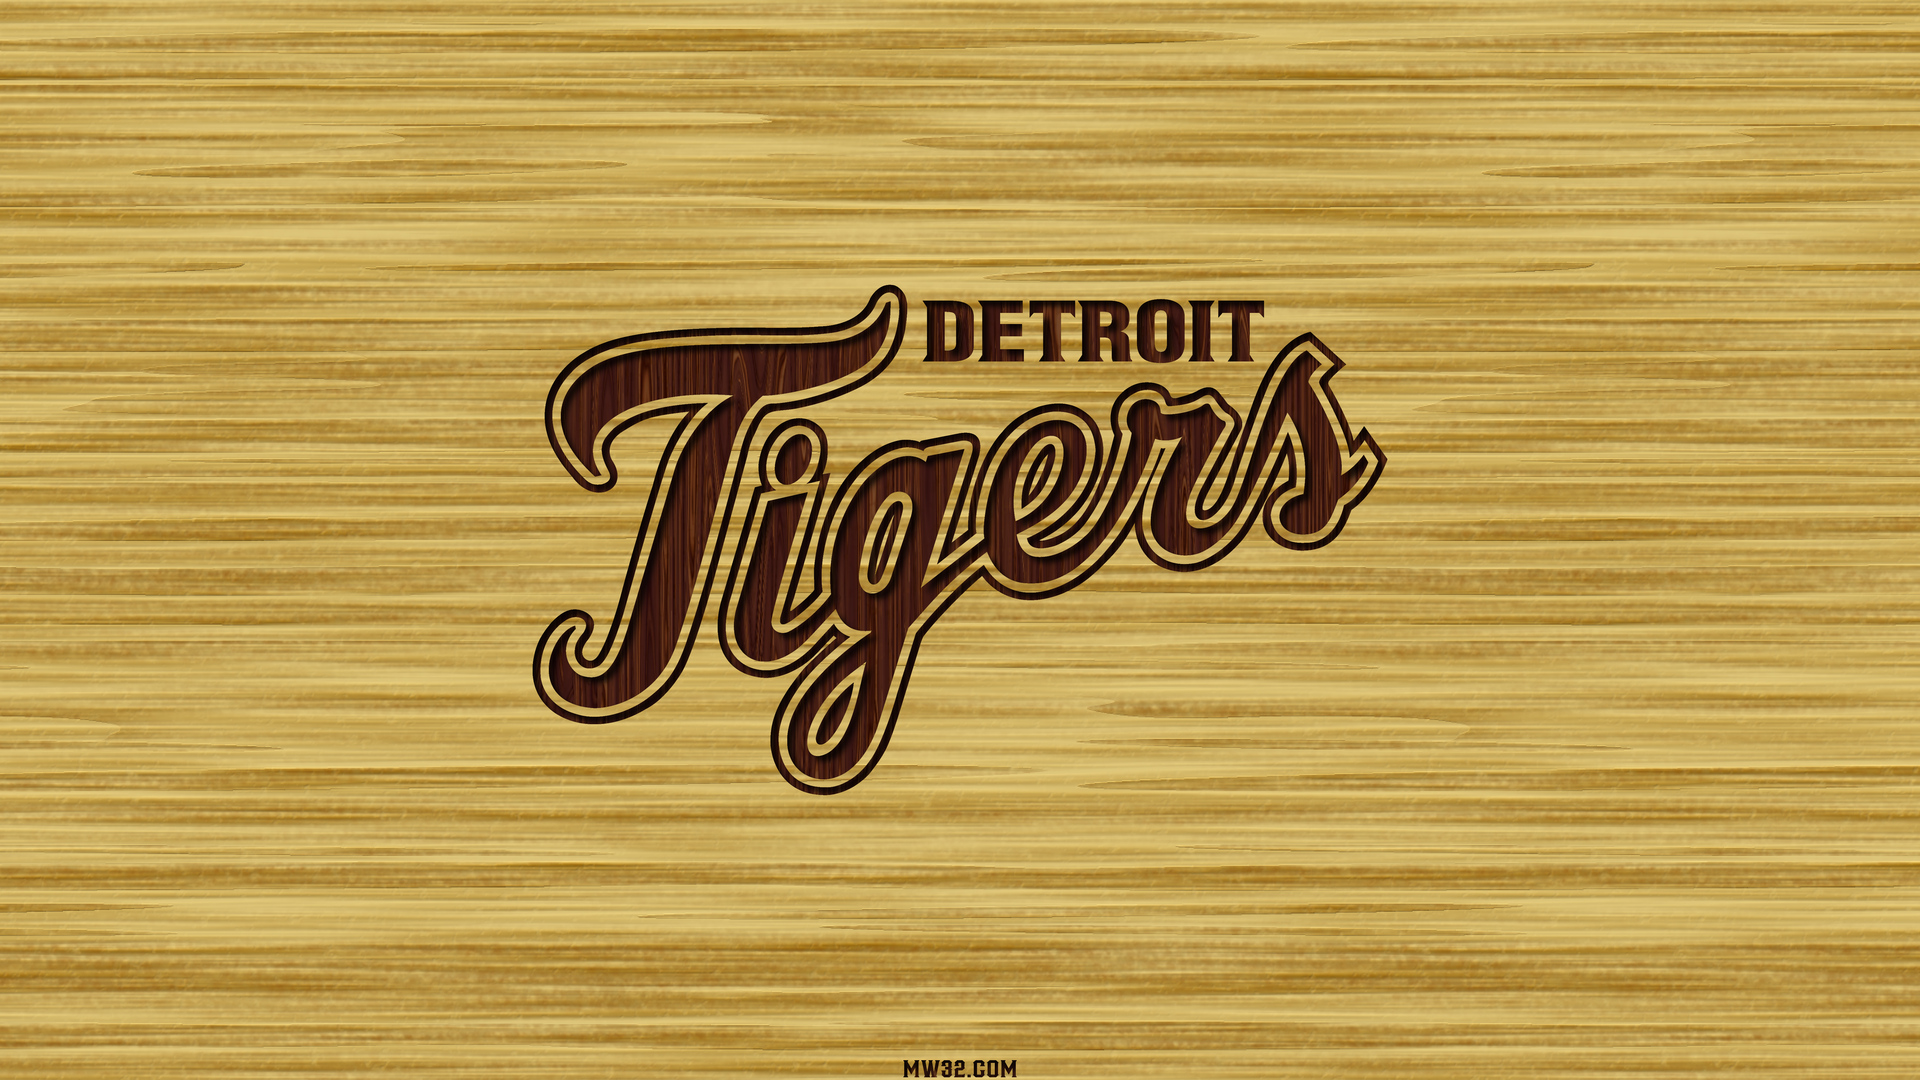 Detroit Tigers Logo Wallpaper HD